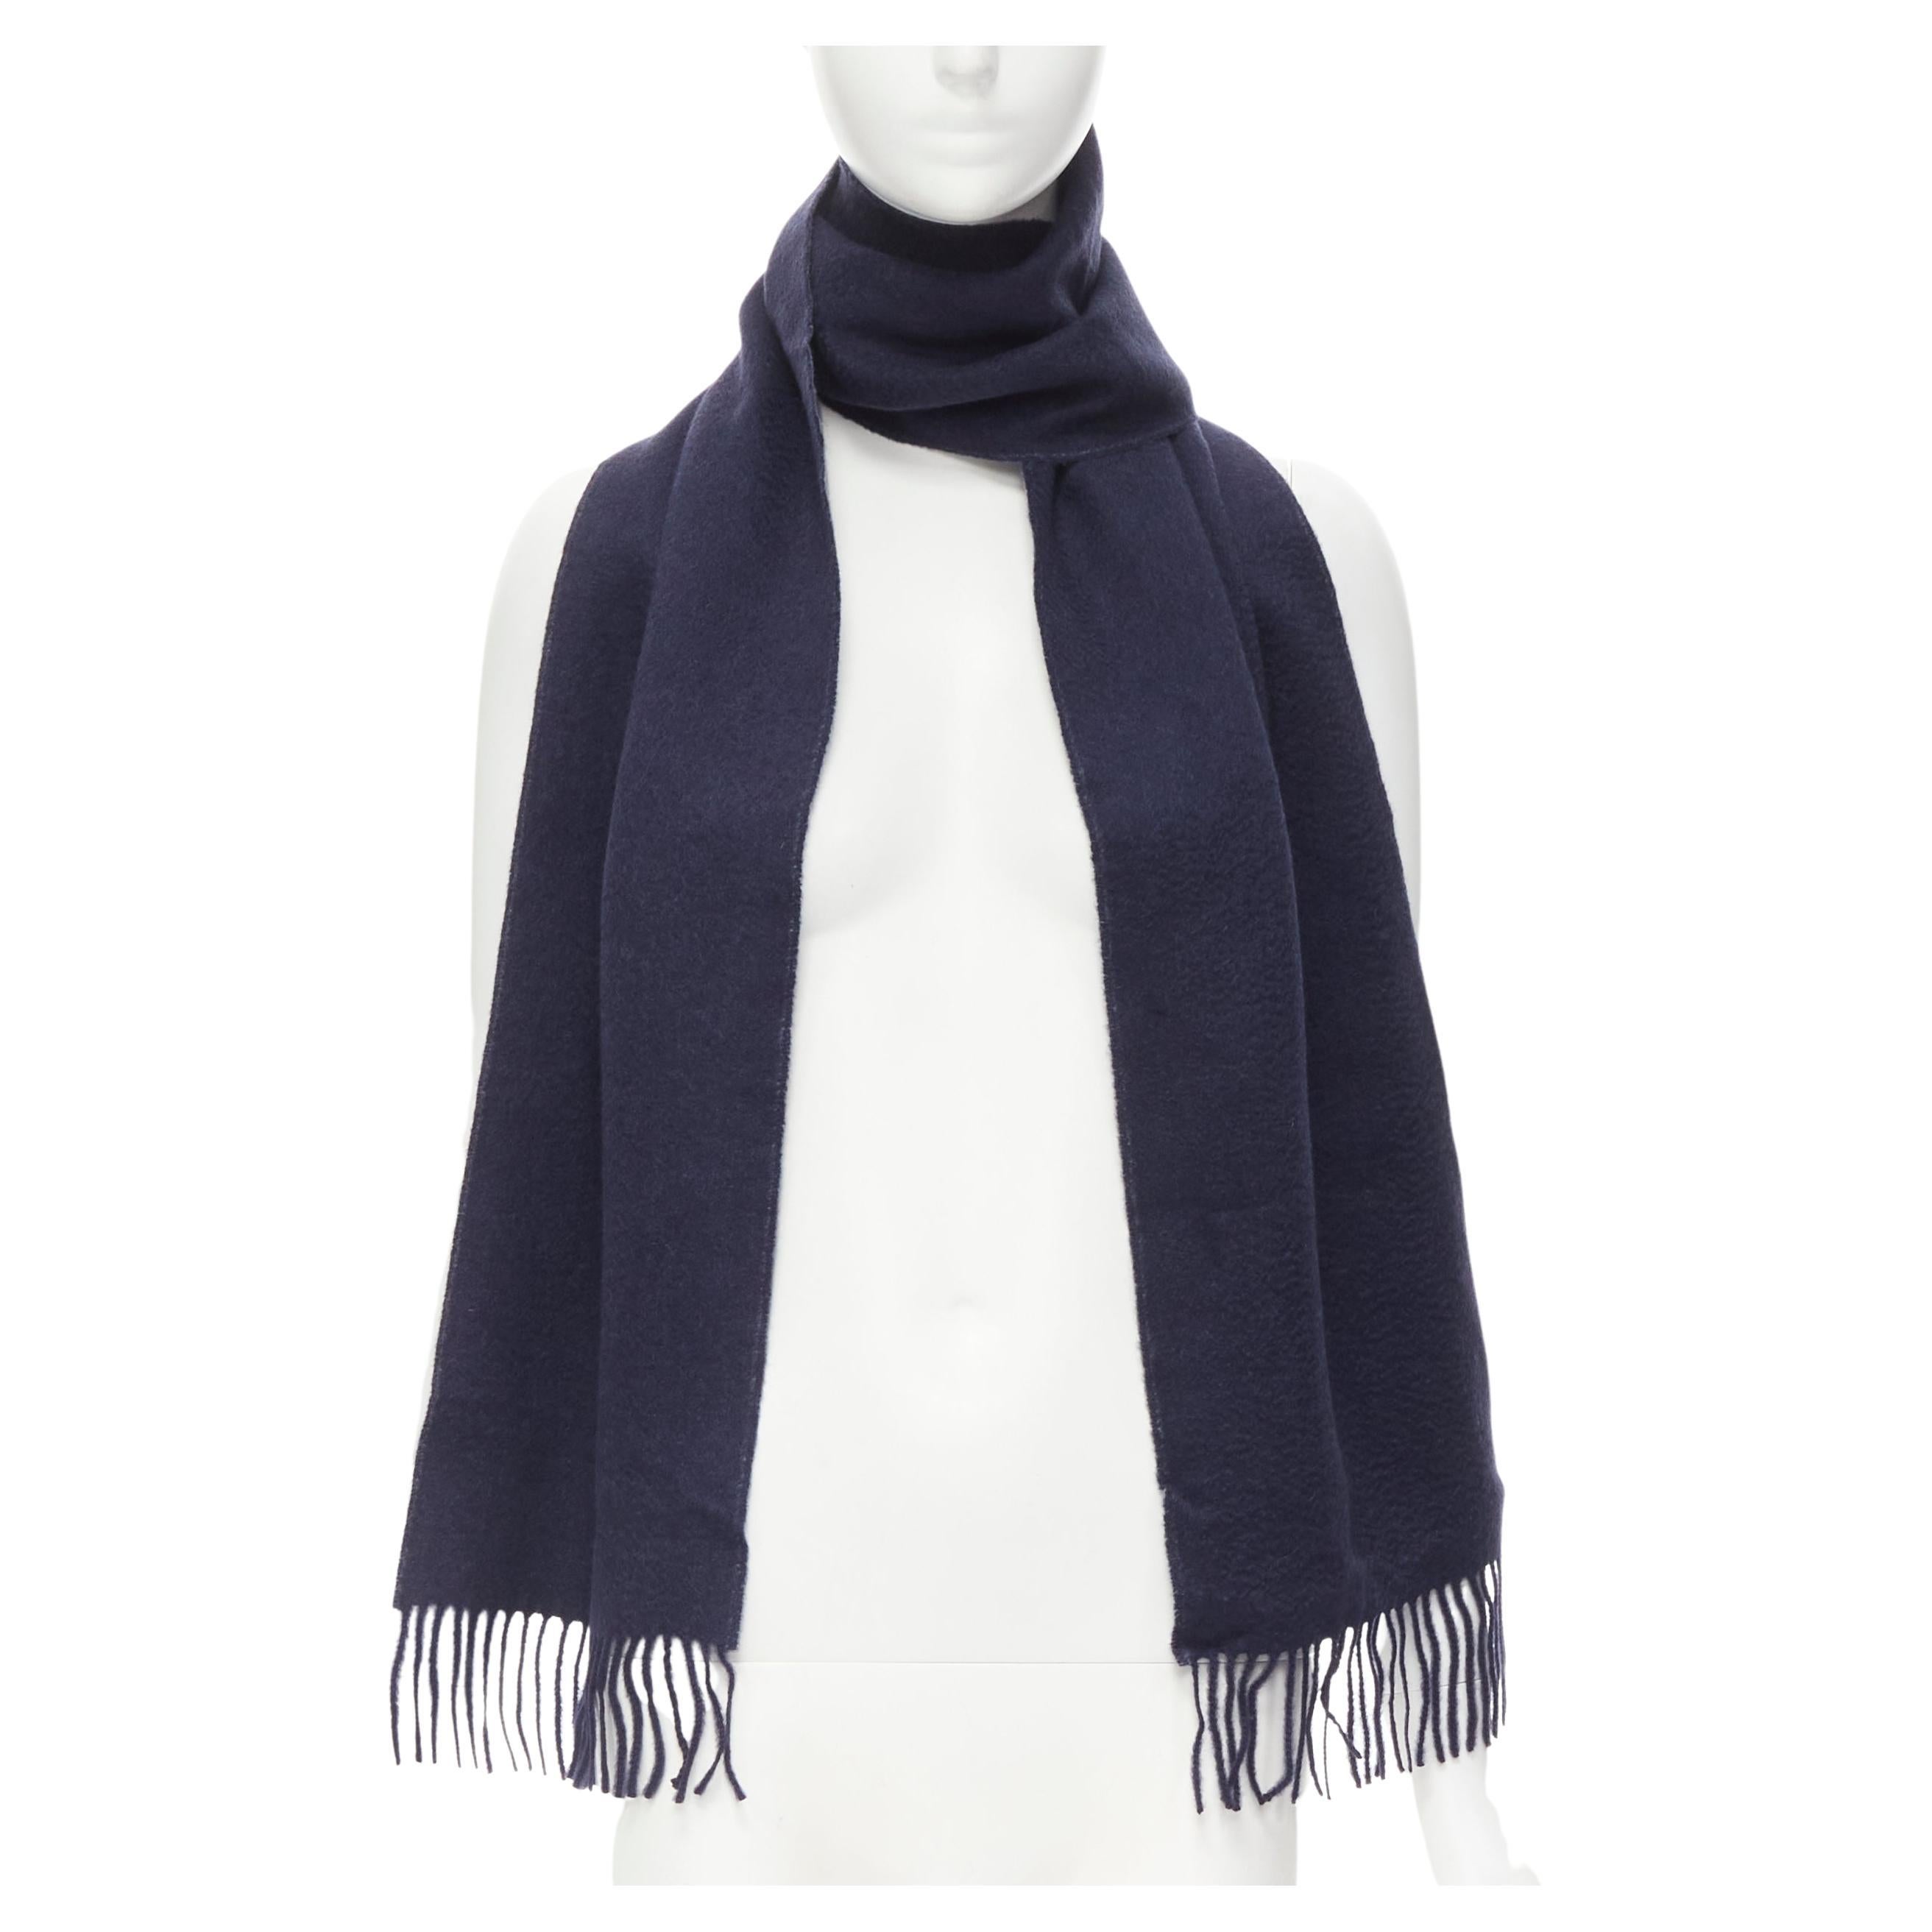 new PRINGLE OF SCOTLAND 100% cashmere navy blue tassel fringe scarf